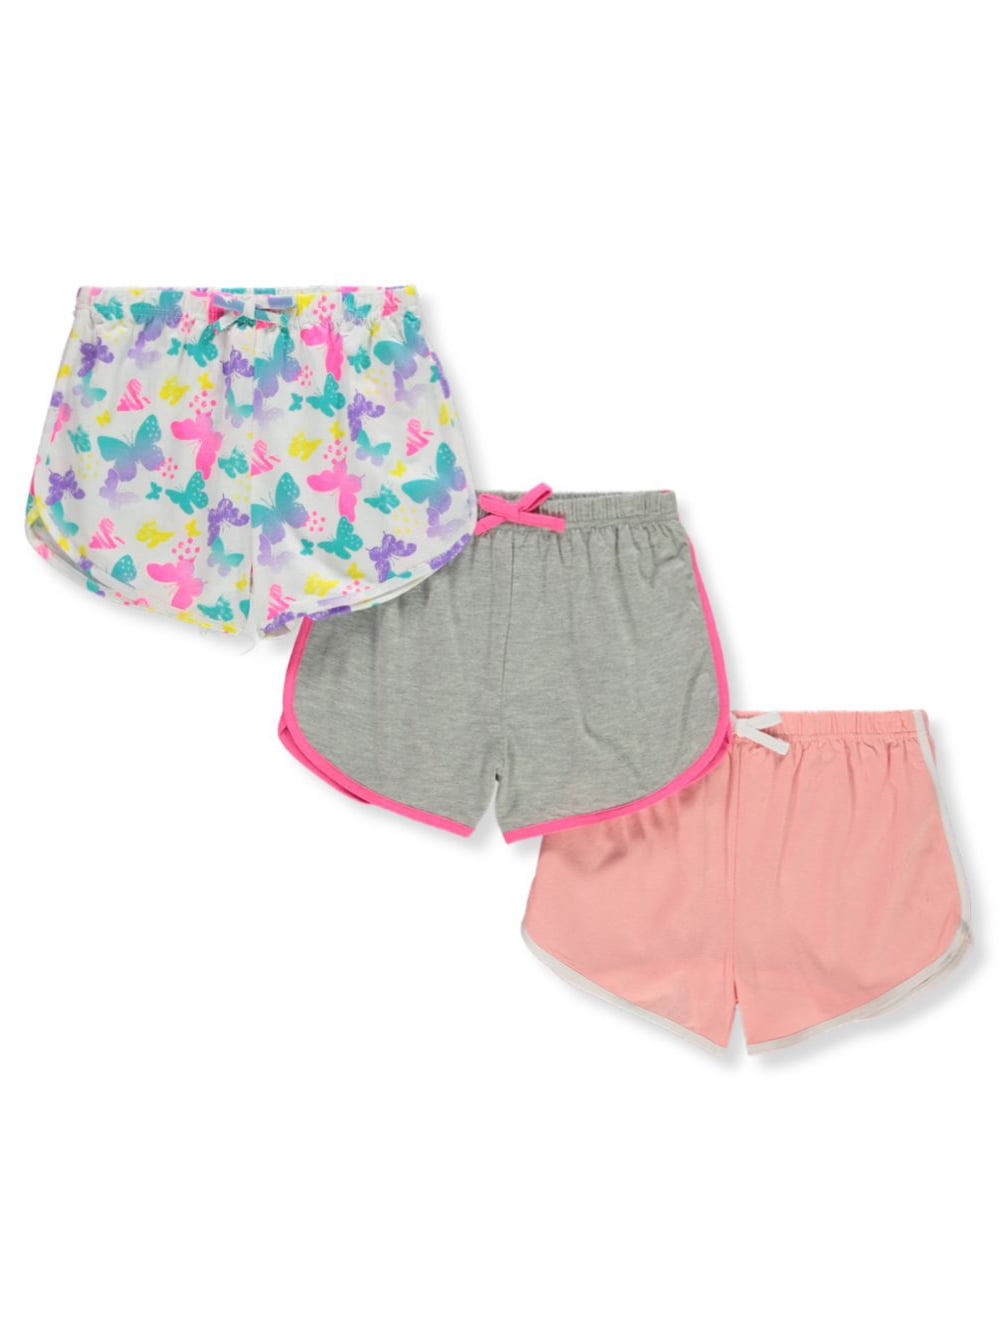 Dreamstar Girls' 3-Pack Butterfly Shorts - white/multi, 3t (Toddler ...